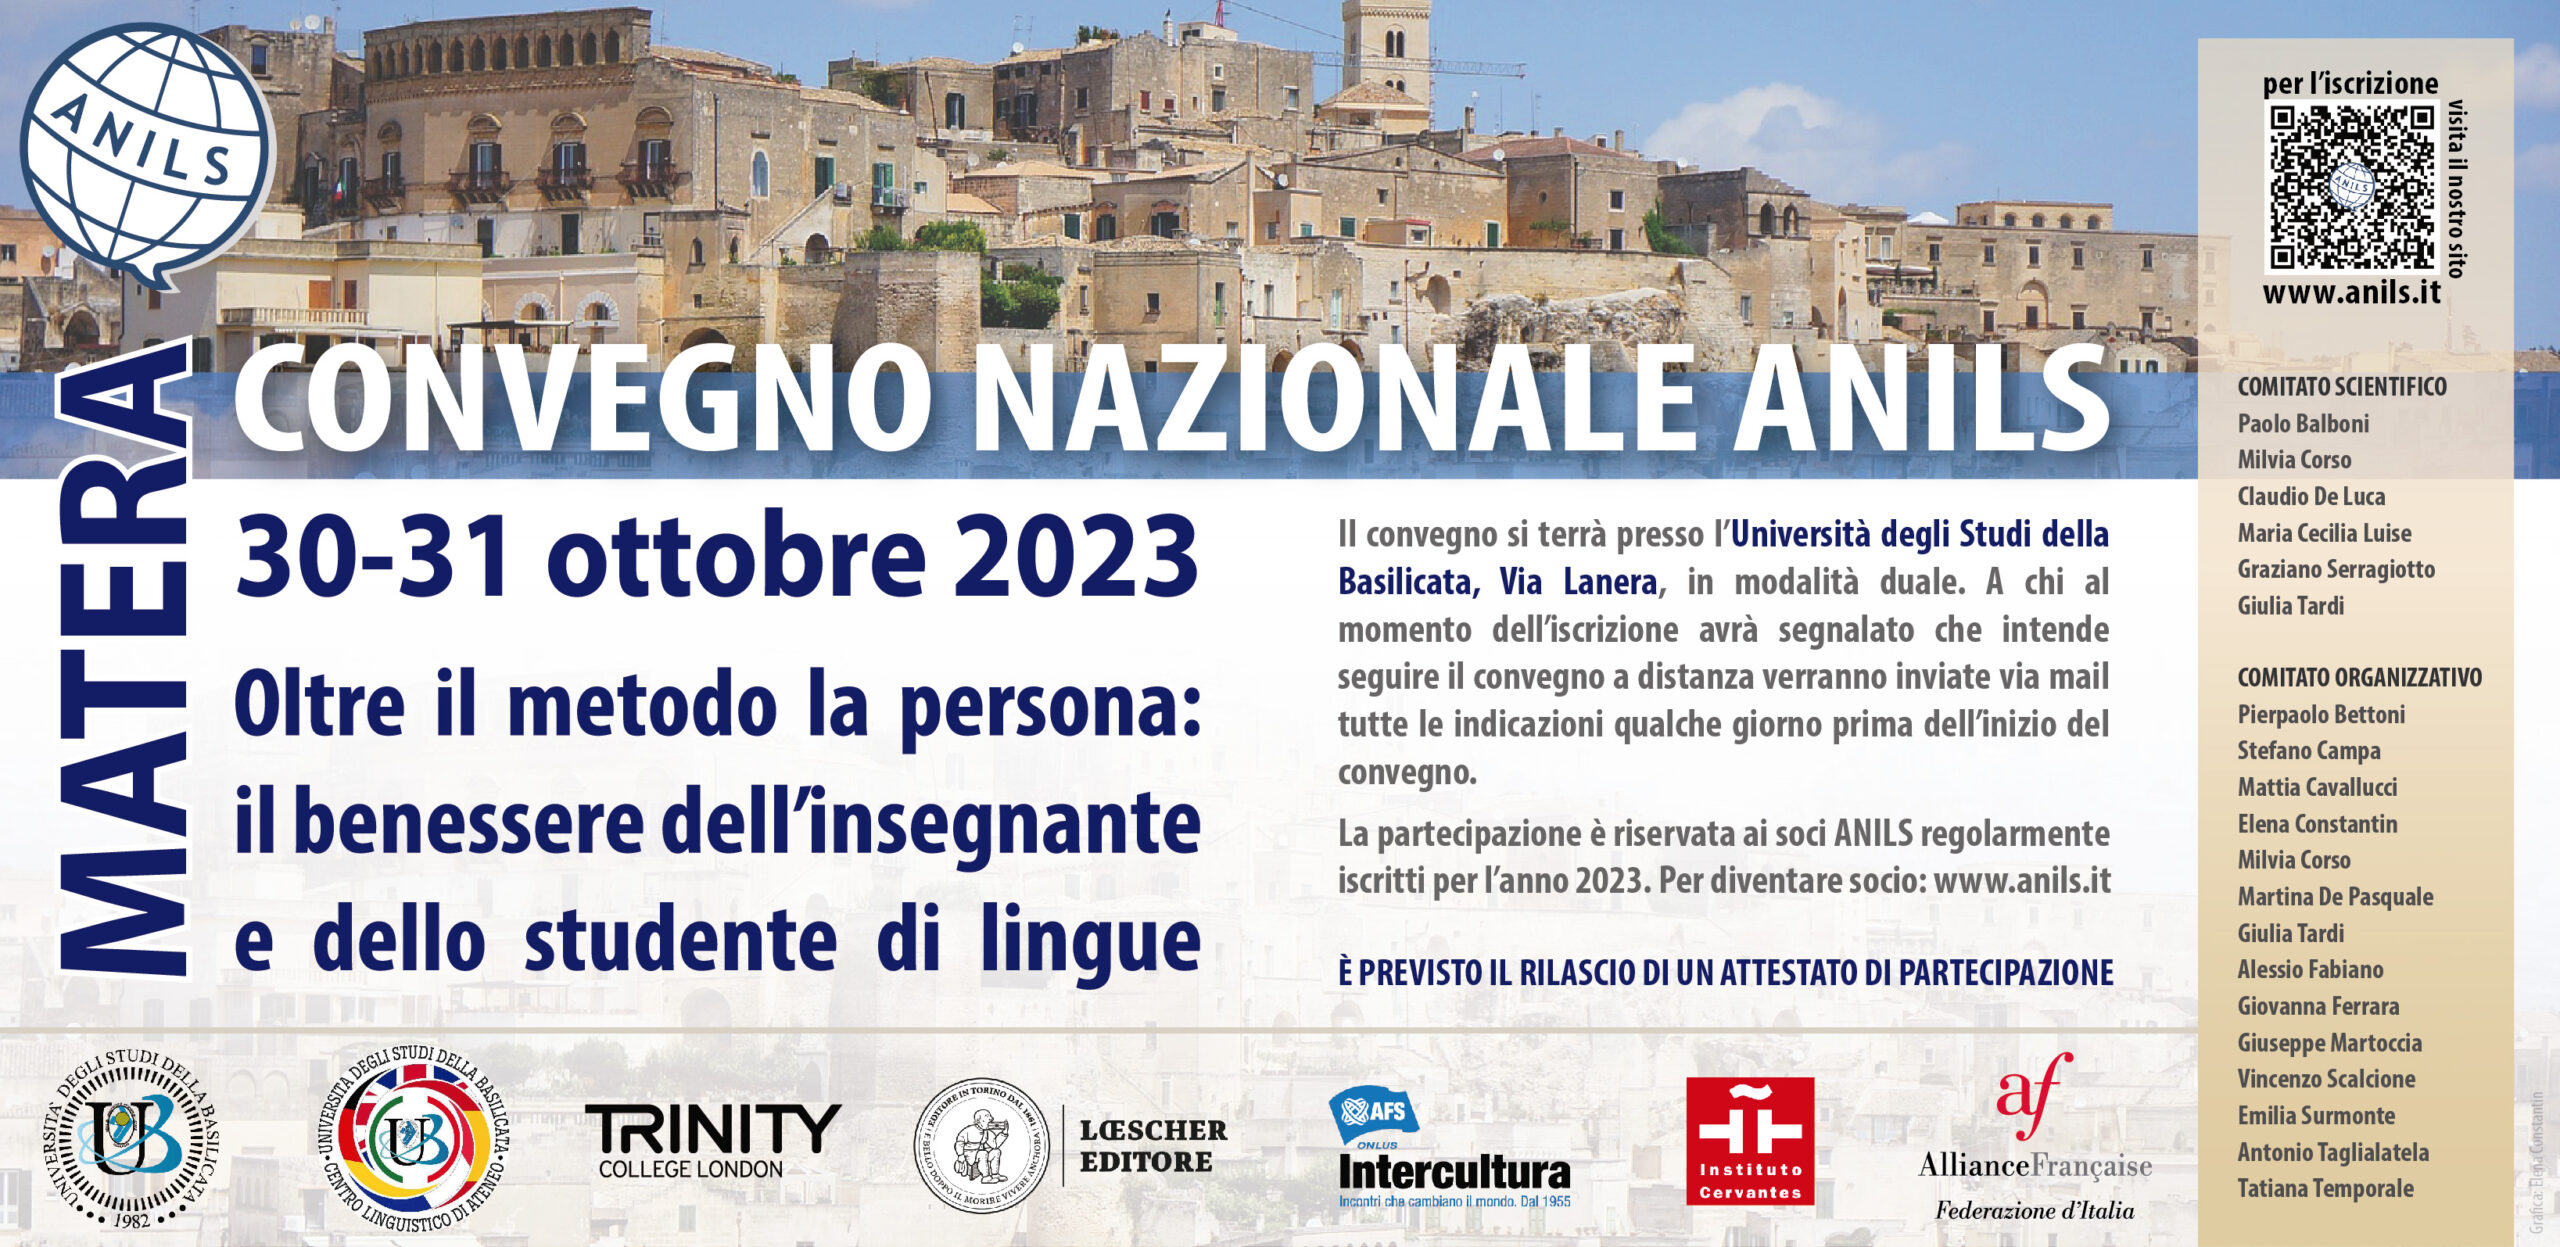 Convegno Nazionale ANILS 2023 a Matera